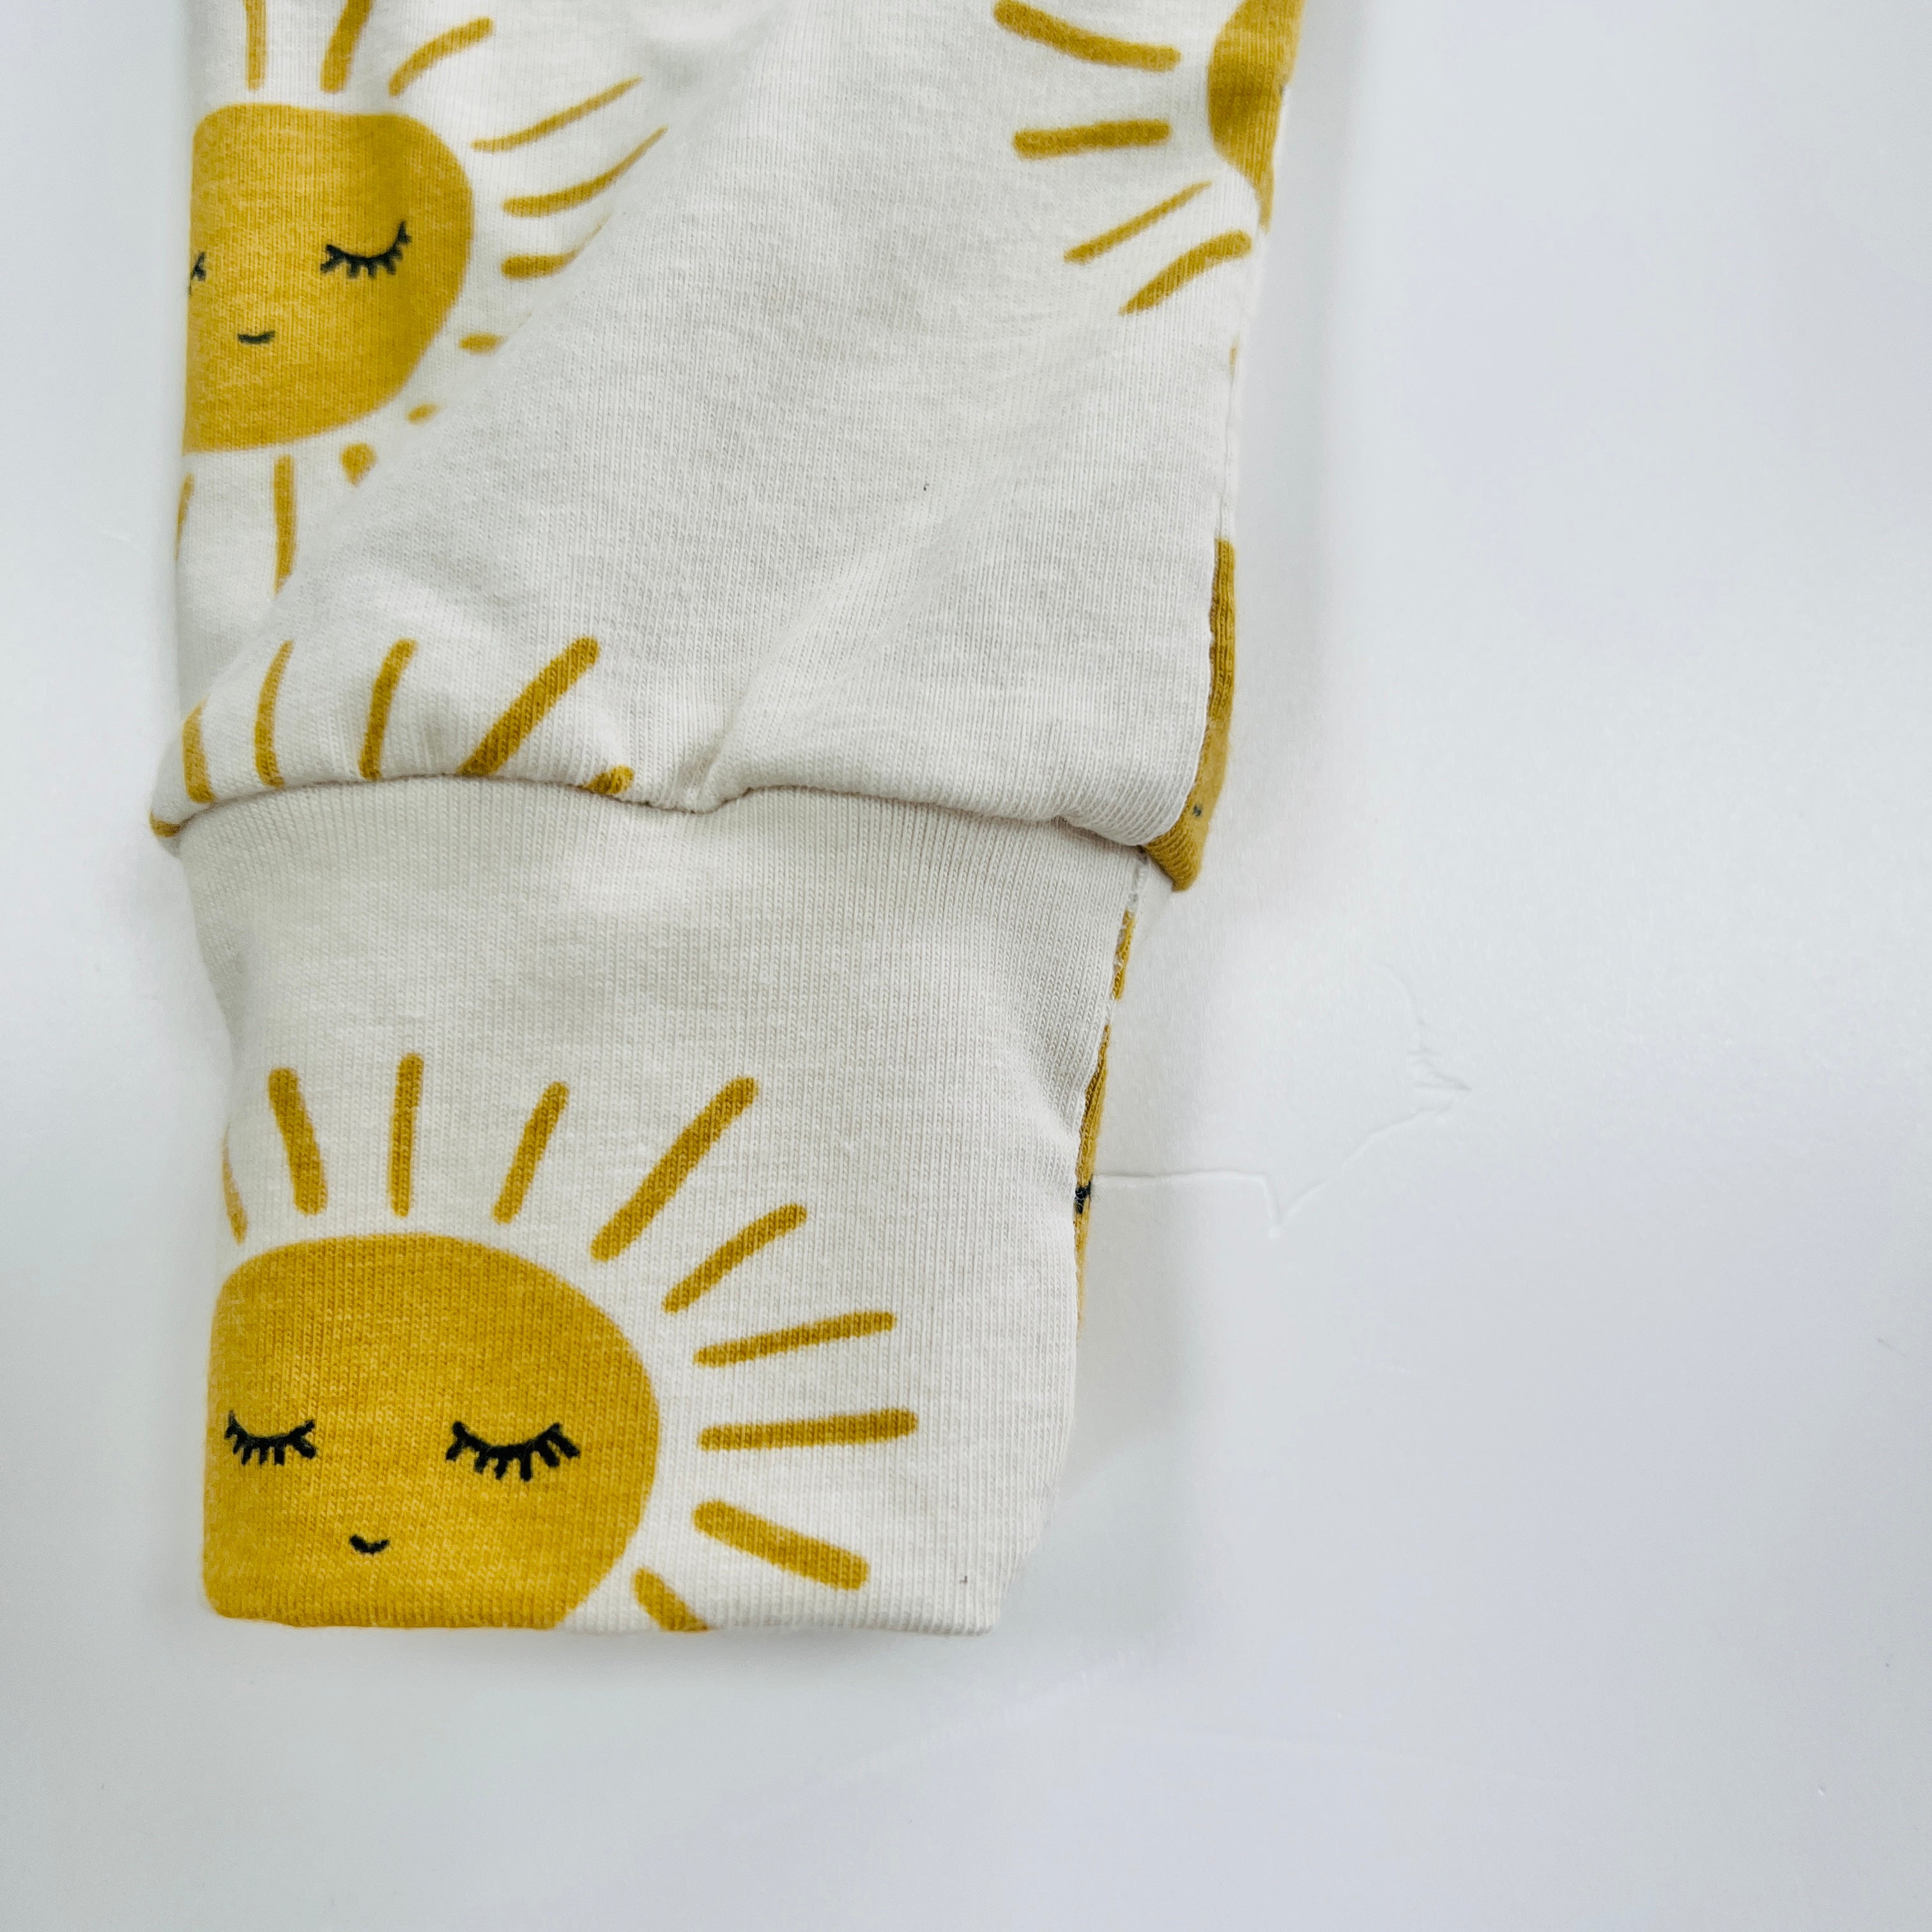 Eddie & Bee organic cotton leggings in Oat “Sunny" print.